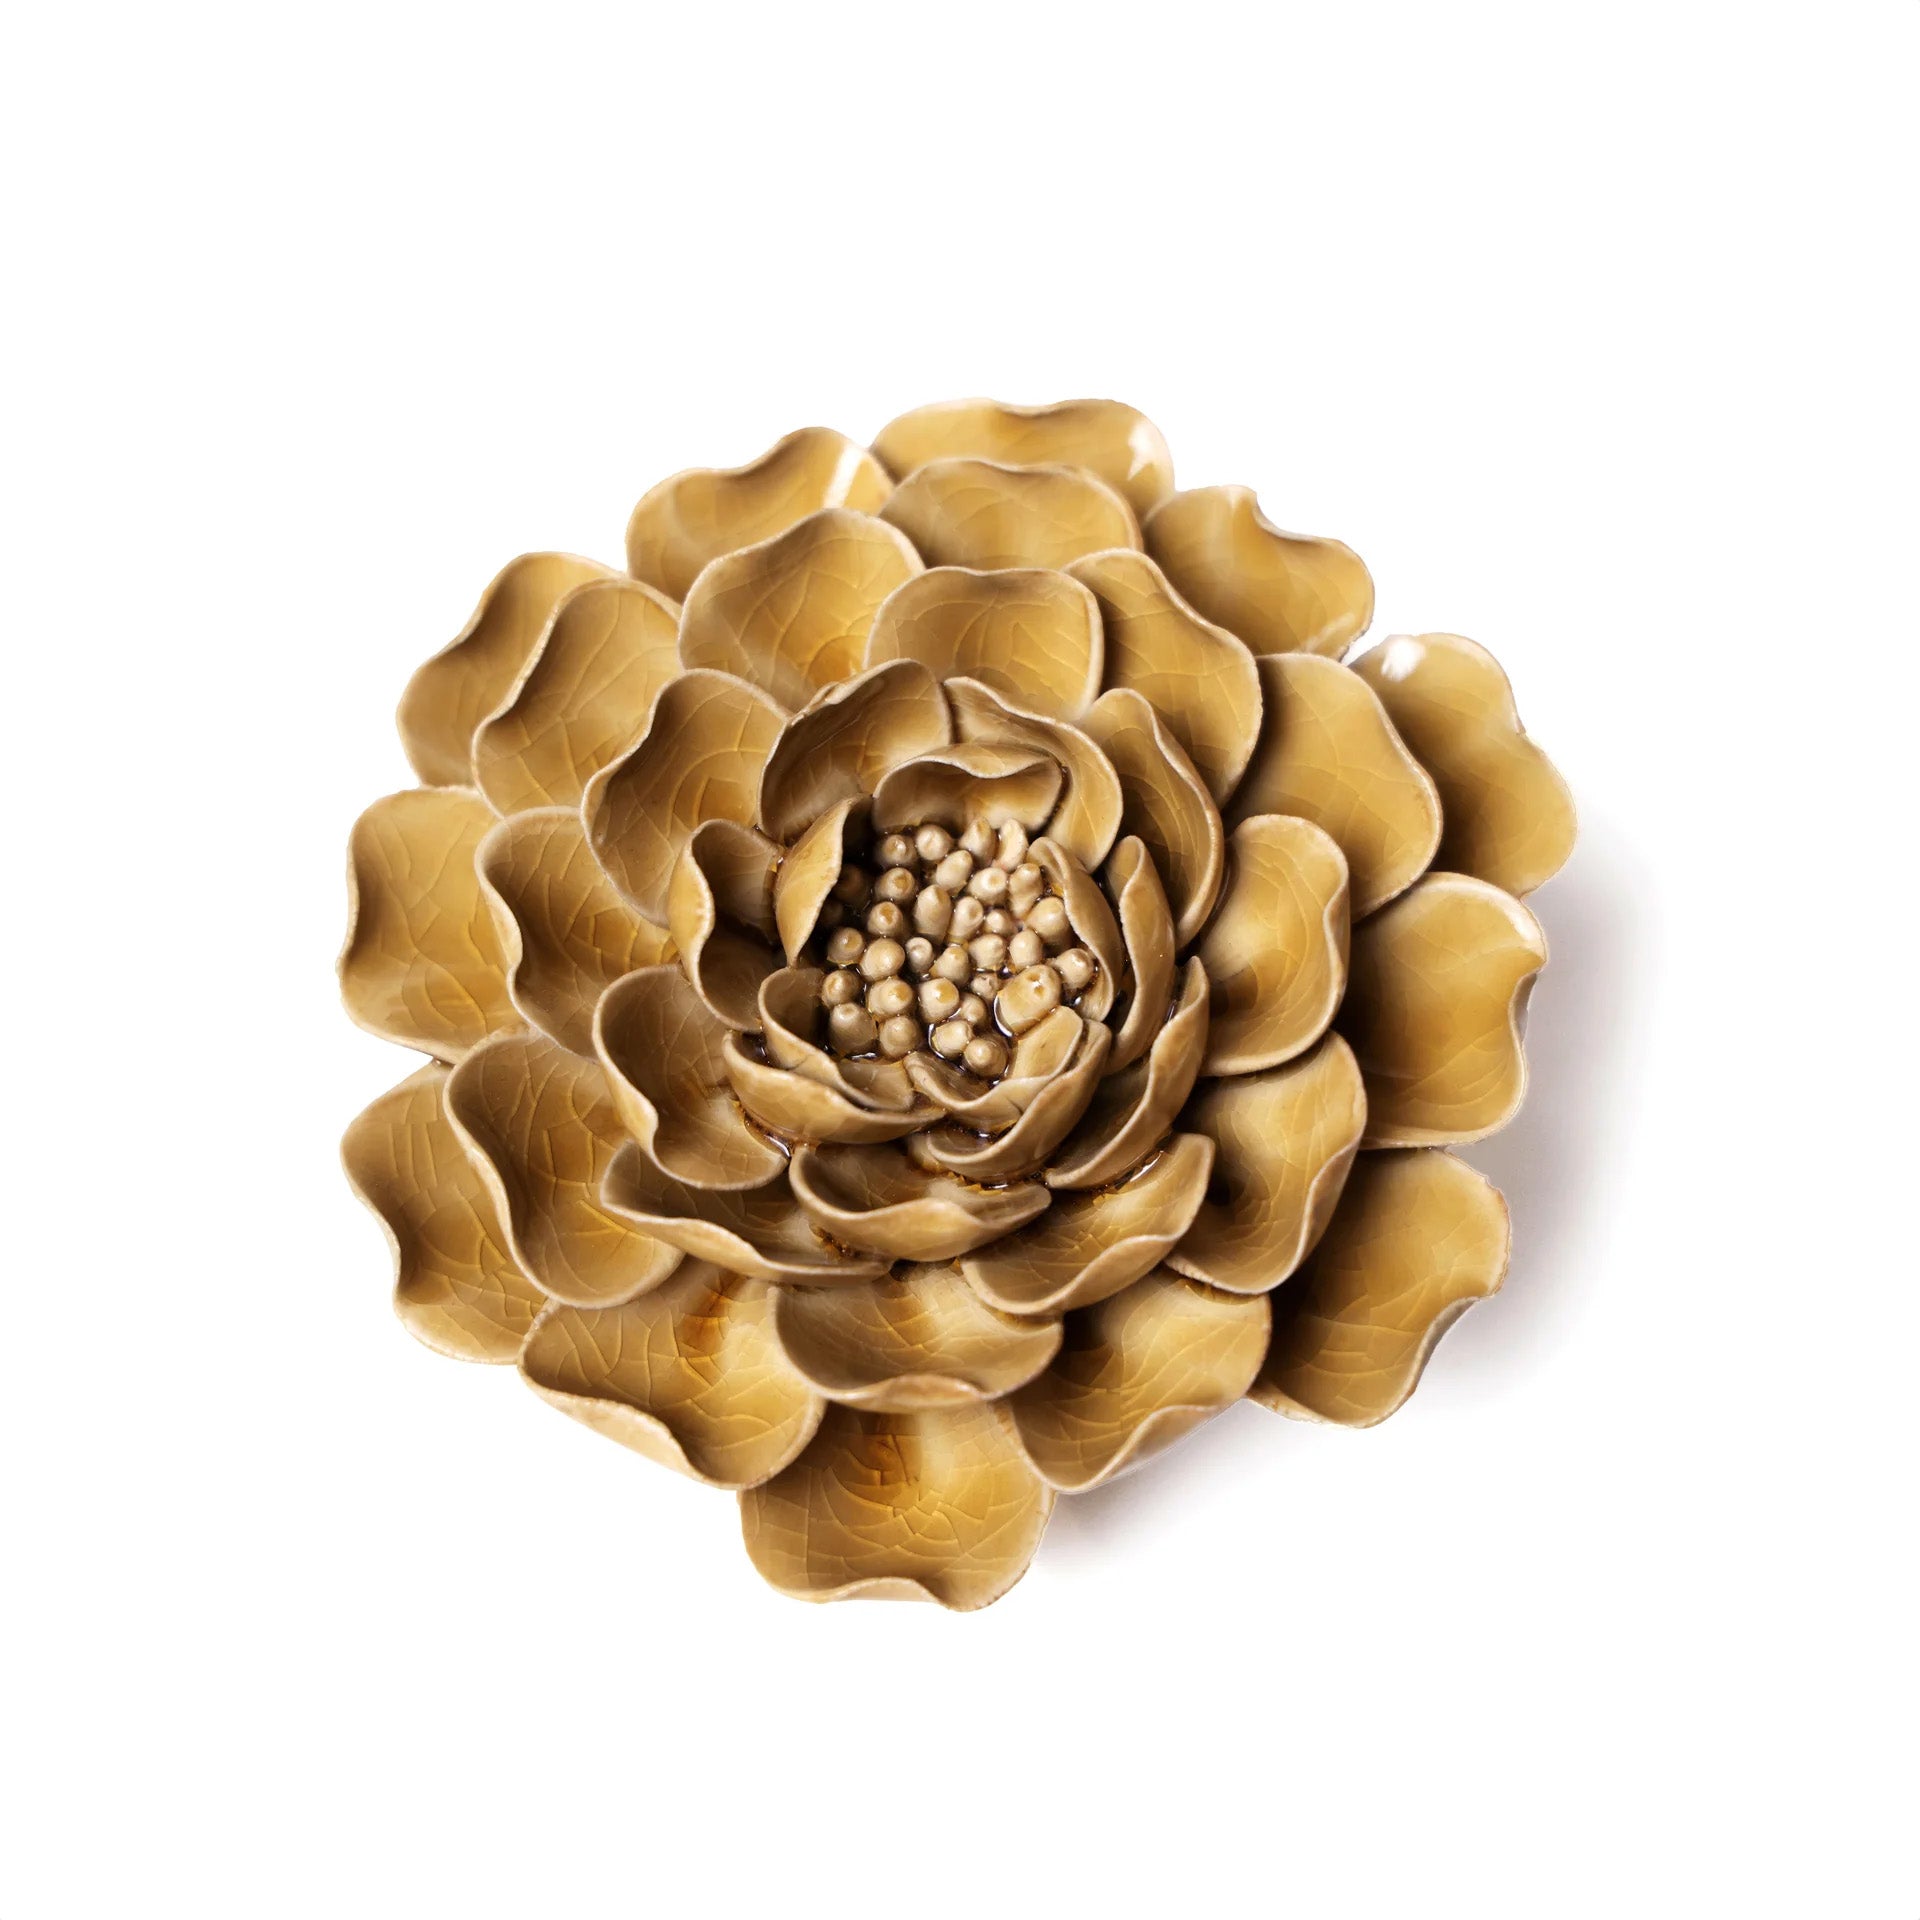 Ceramic Wallflowers - Chrysler Museum Shop